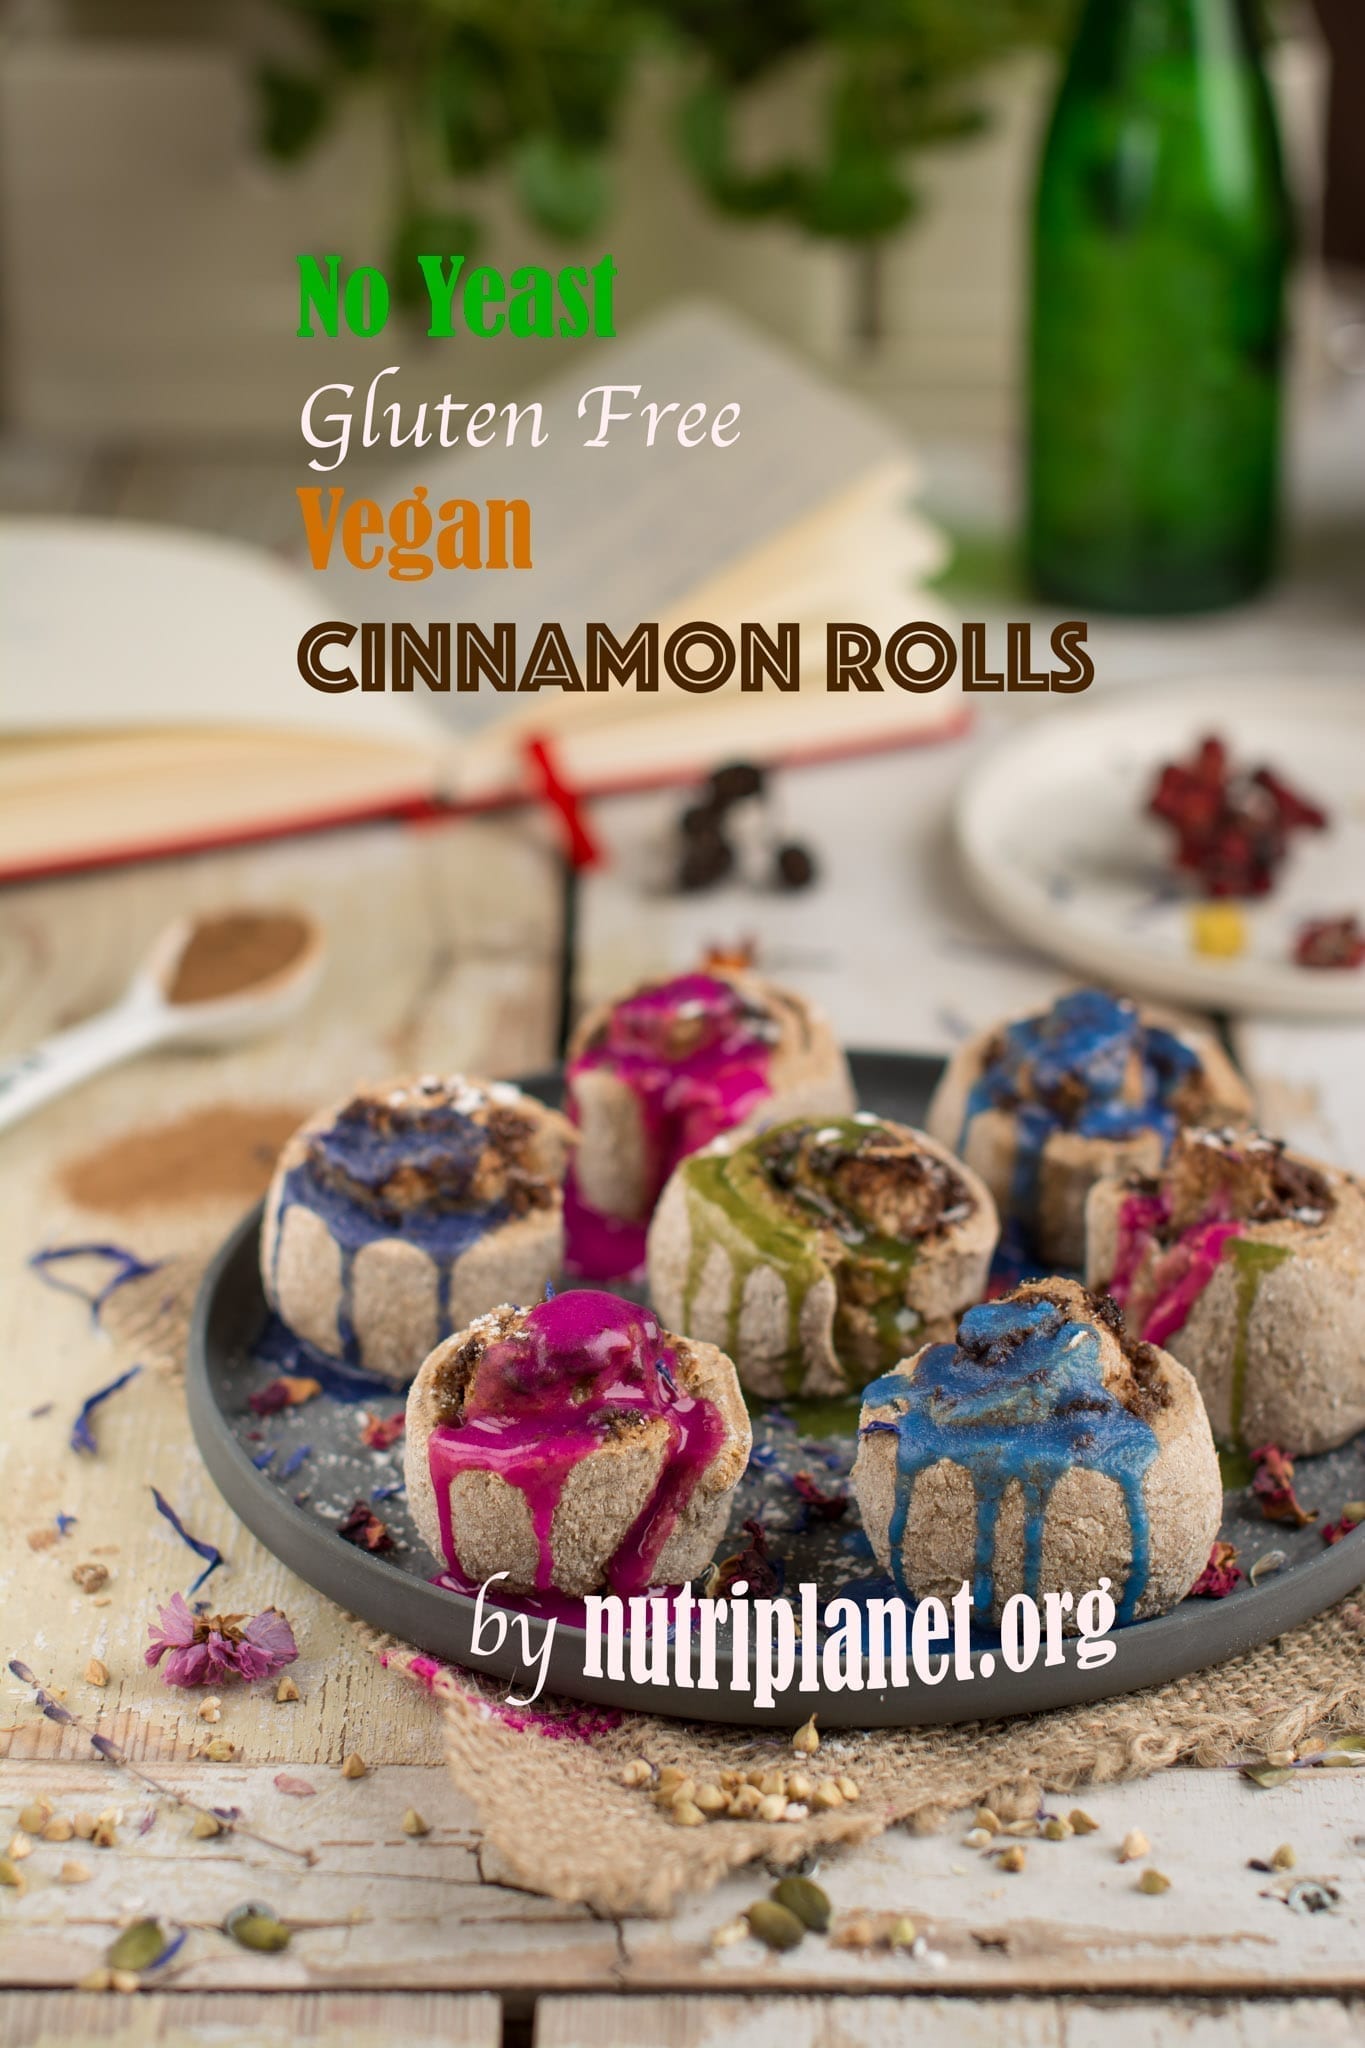 Vegan Gluten-Free Cinnamon Rolls